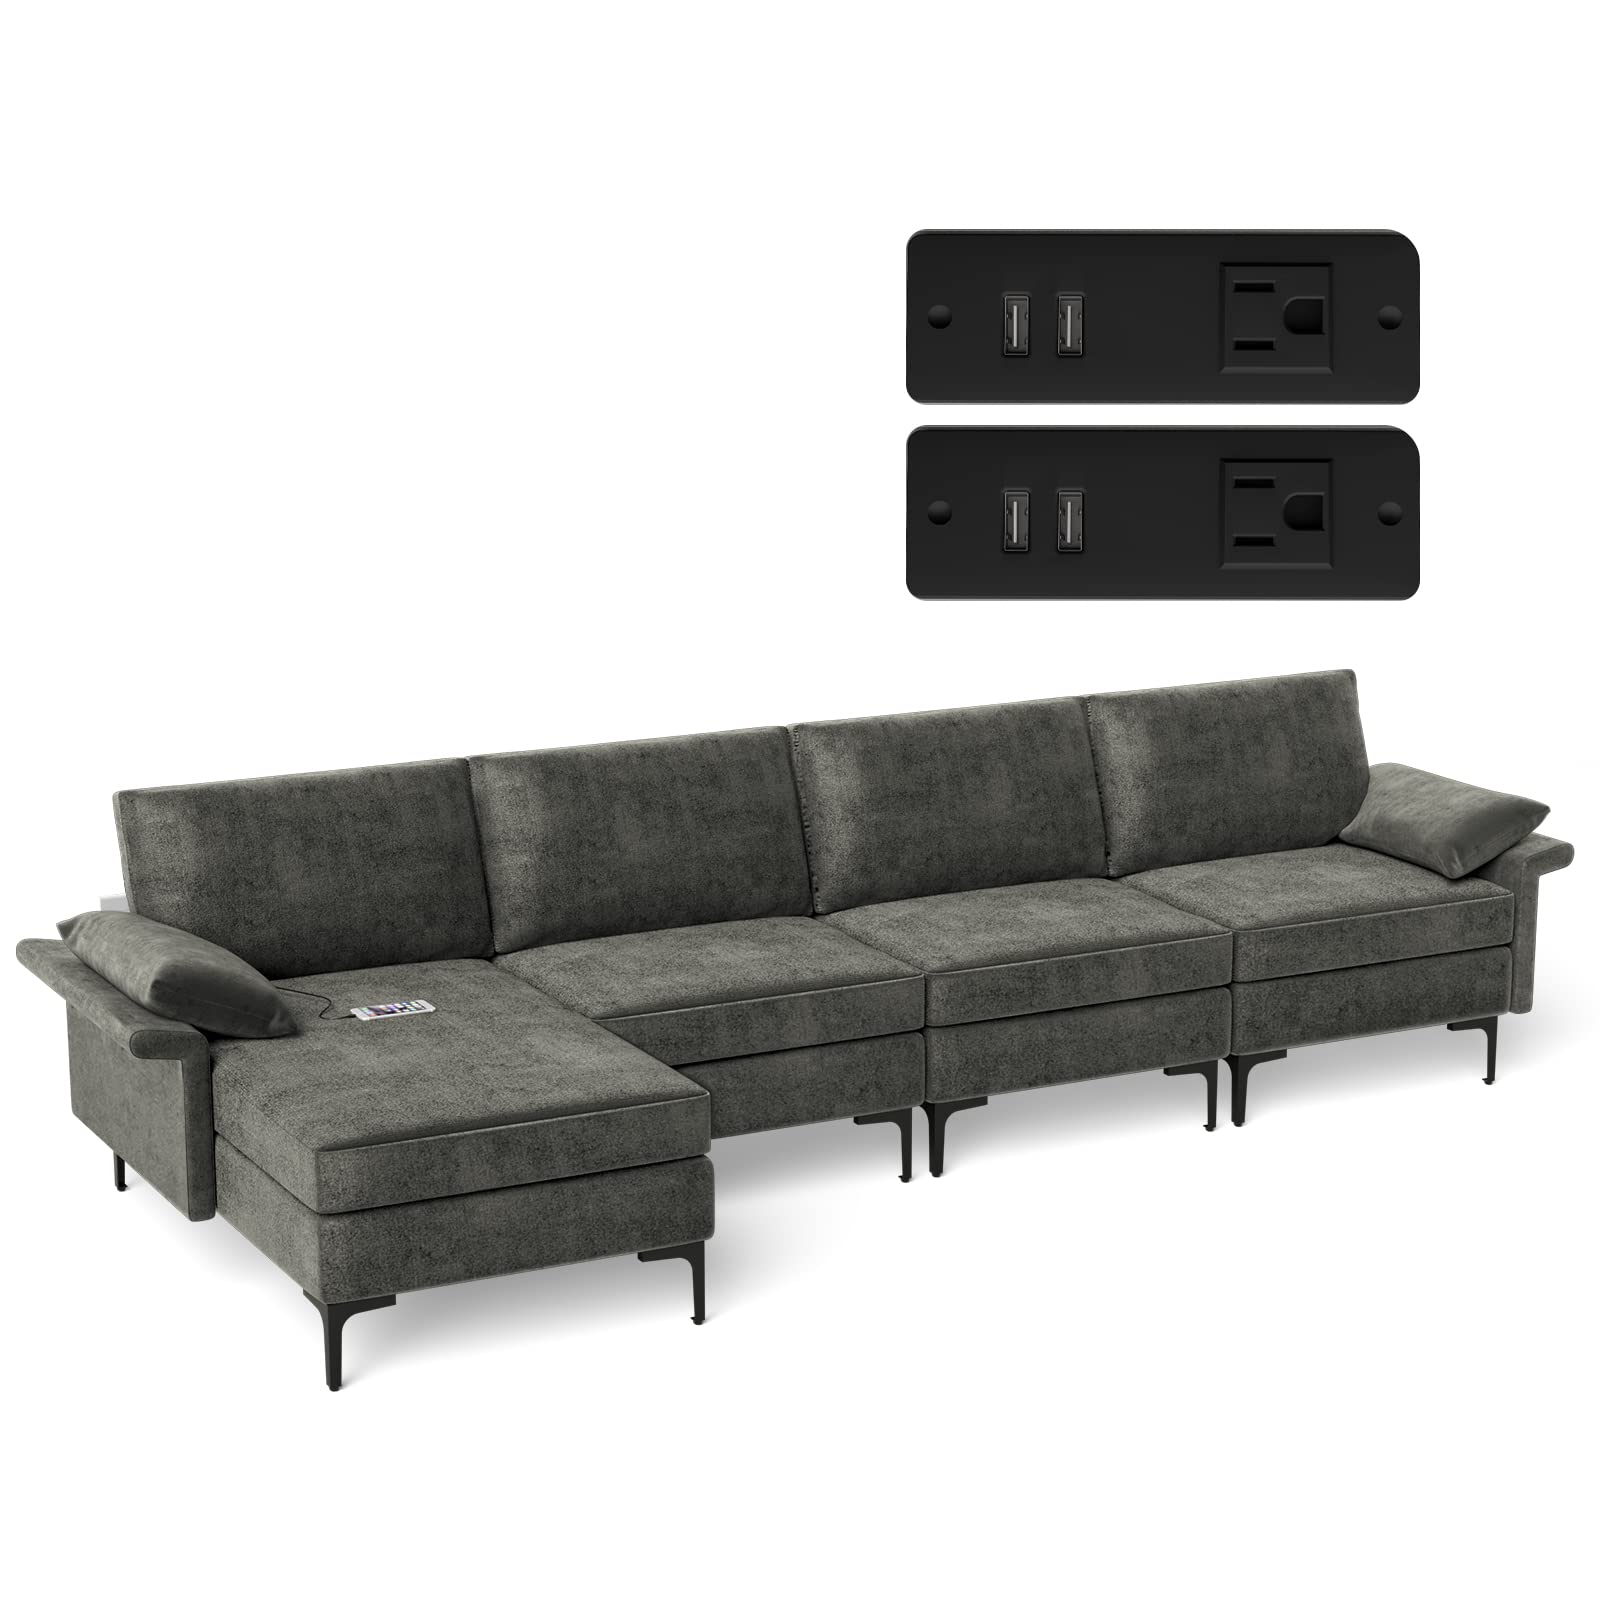 Giantex Sofa, Zippered Armrests, Steel Legs